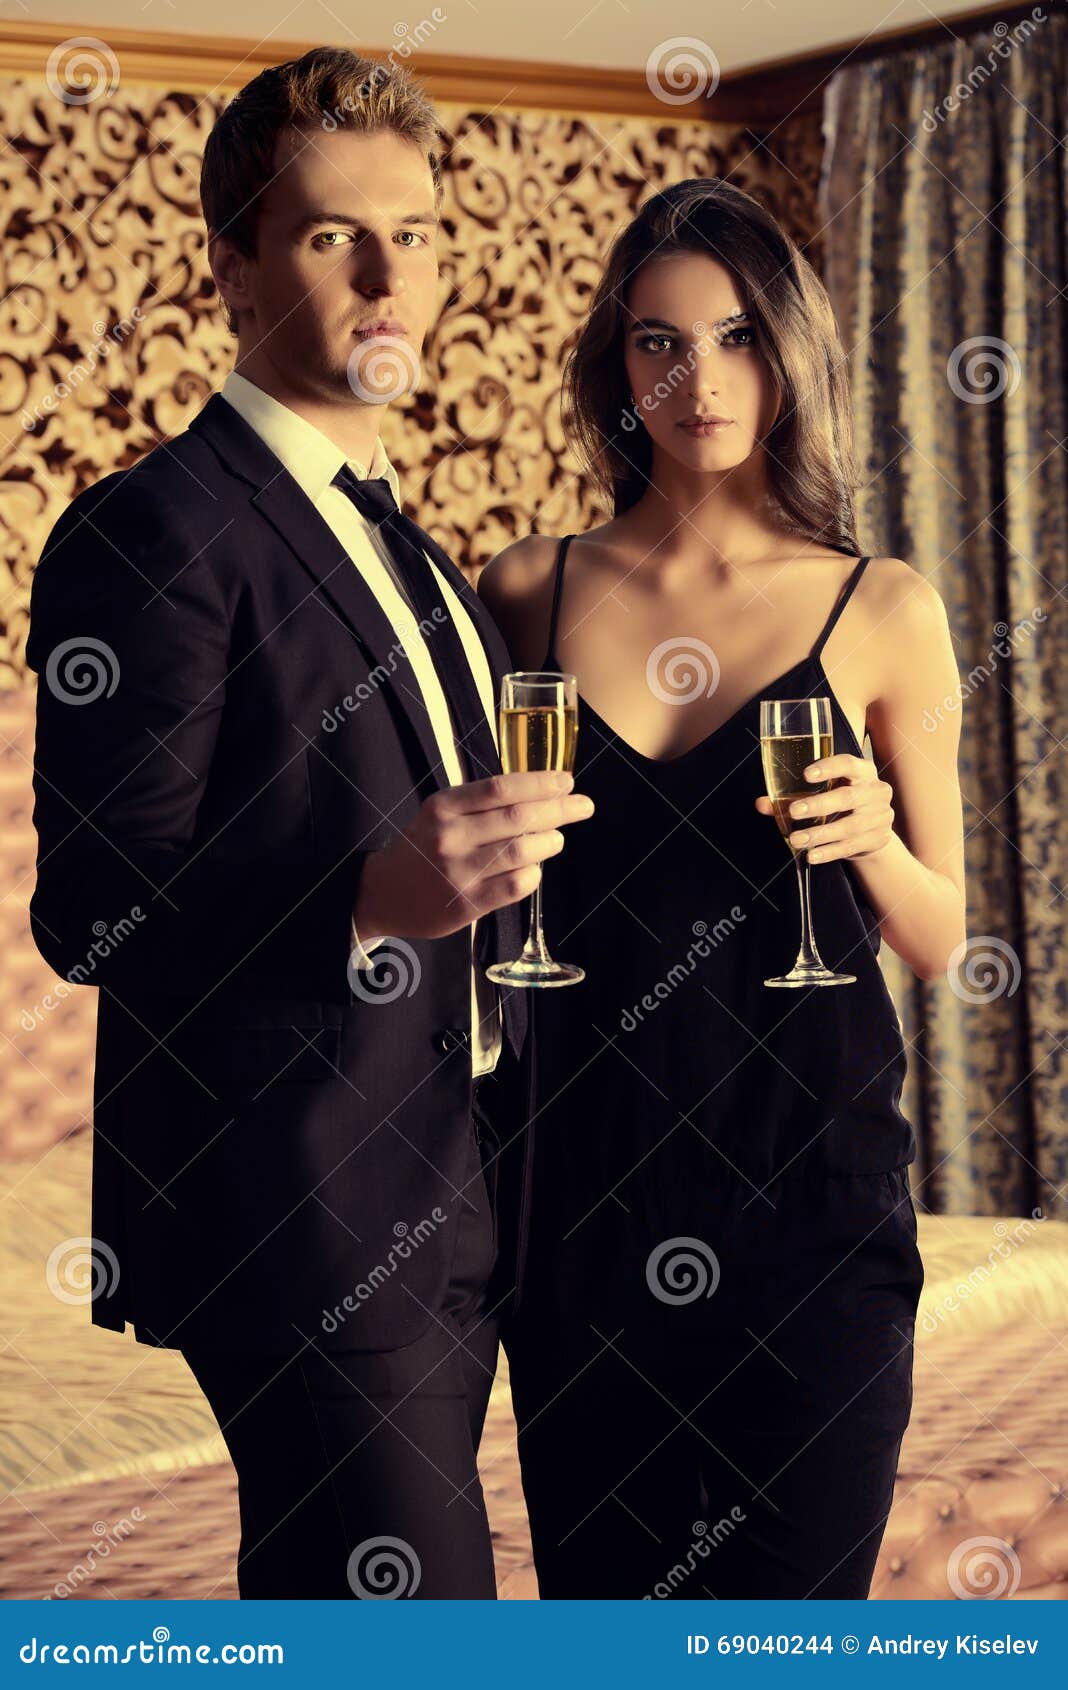 Drinking champagne stock photo. Image of classy, flirt - 69040244